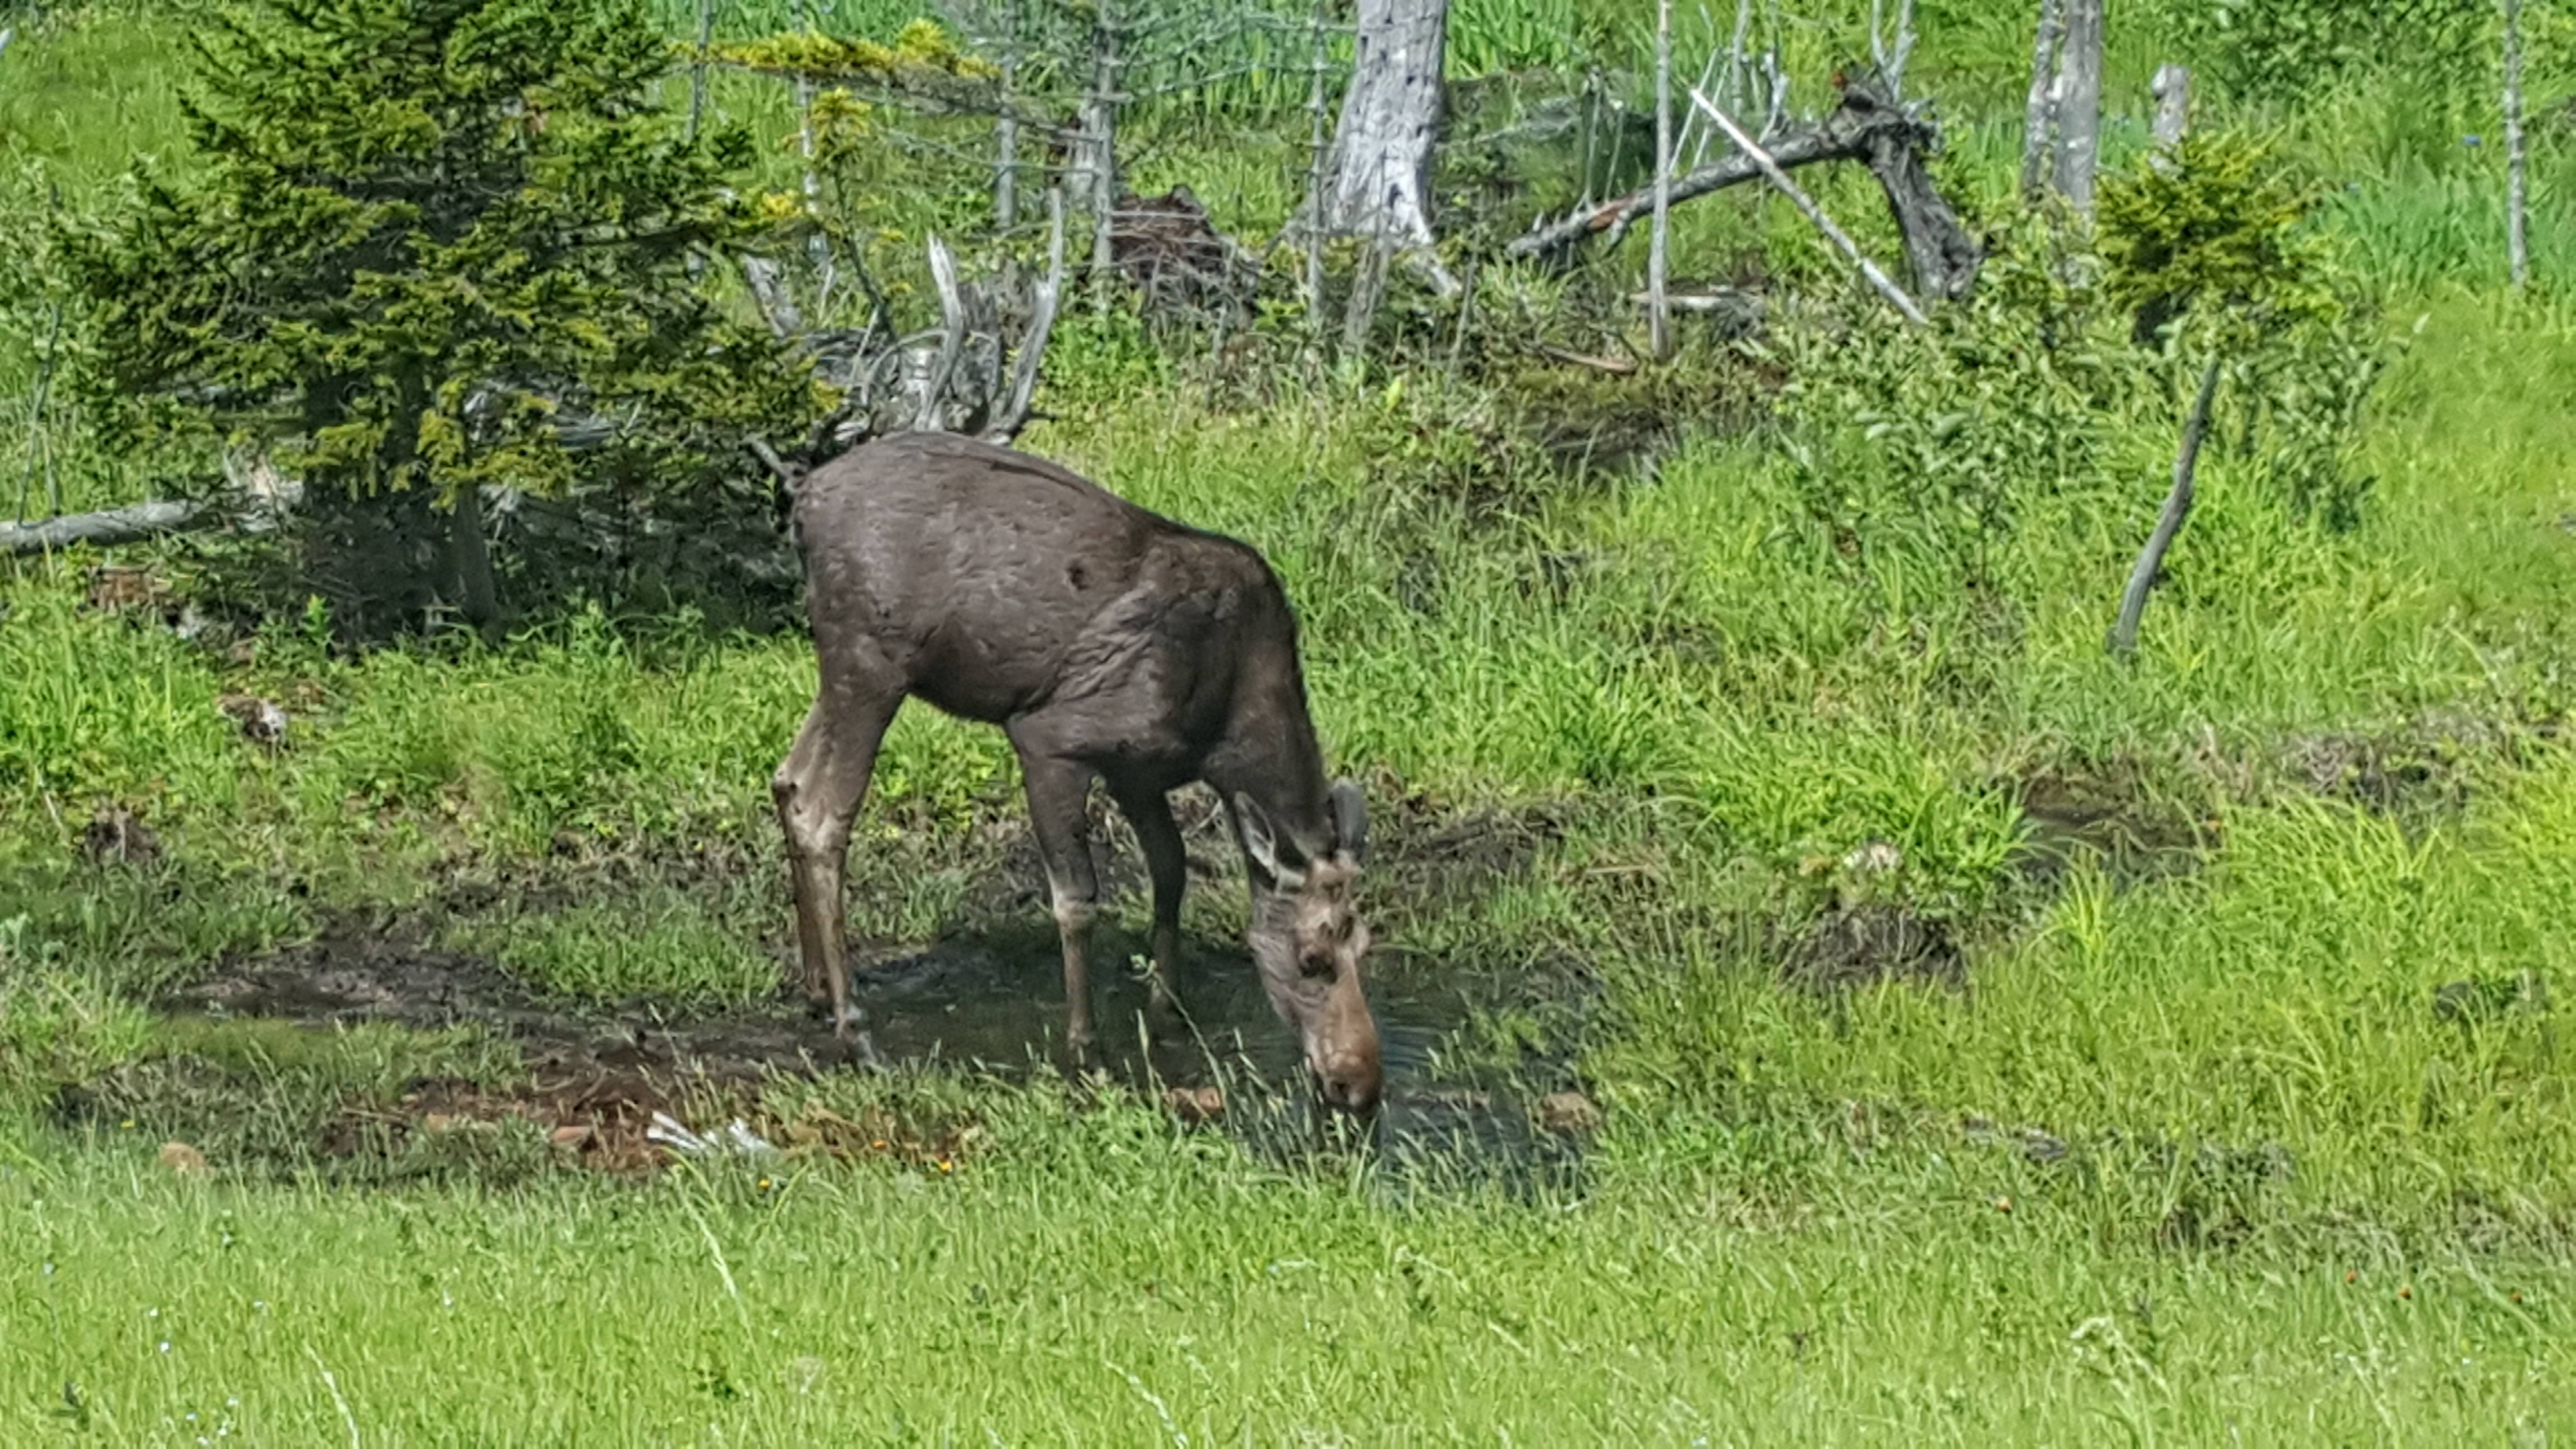 Moose grazing near forest.